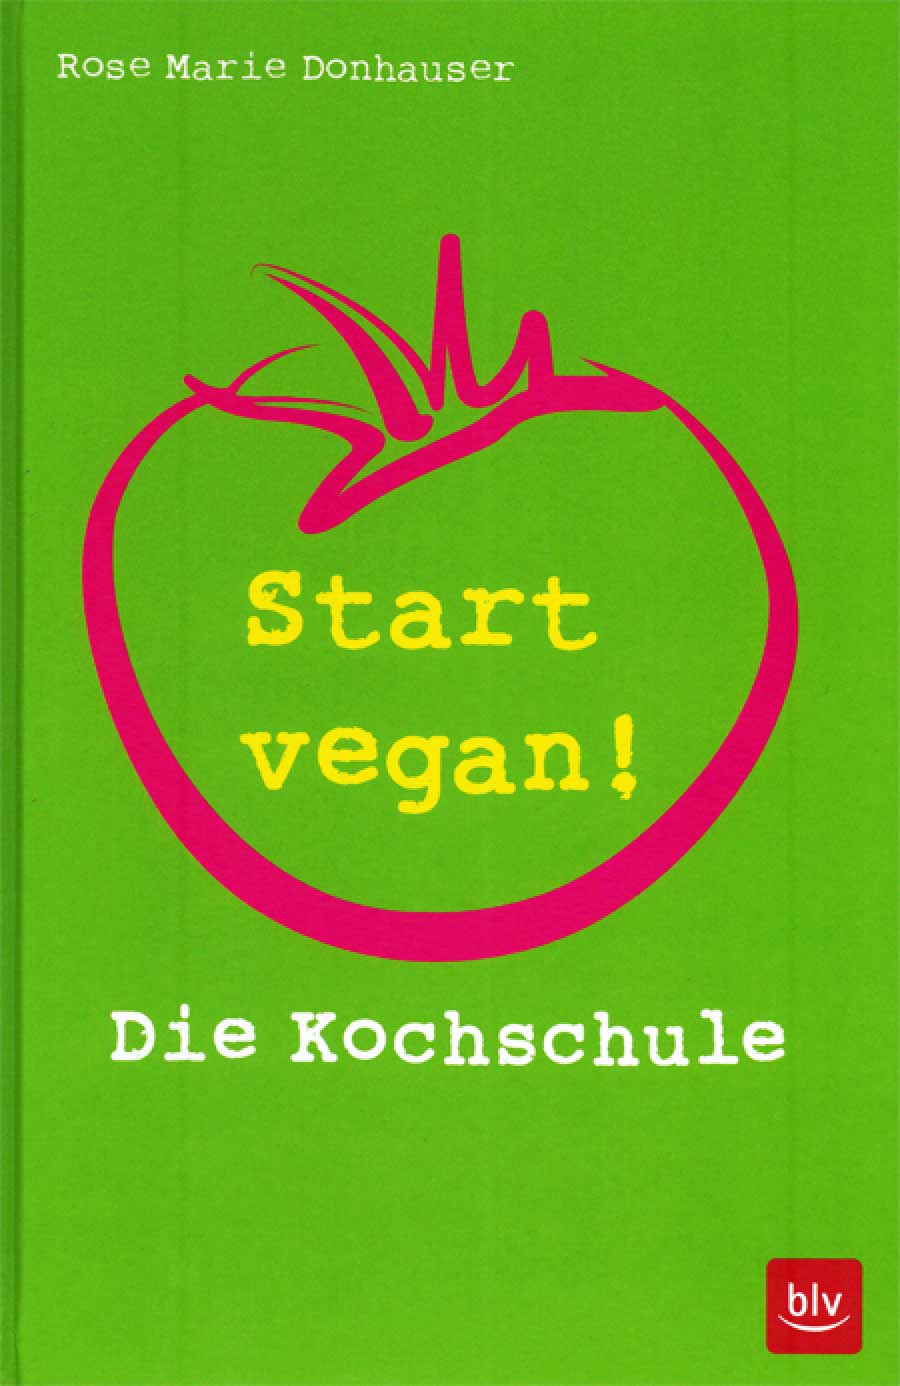 Start-Vegan_Die-Kochschule_Rose-Marie-Donhauser_April-2014-1